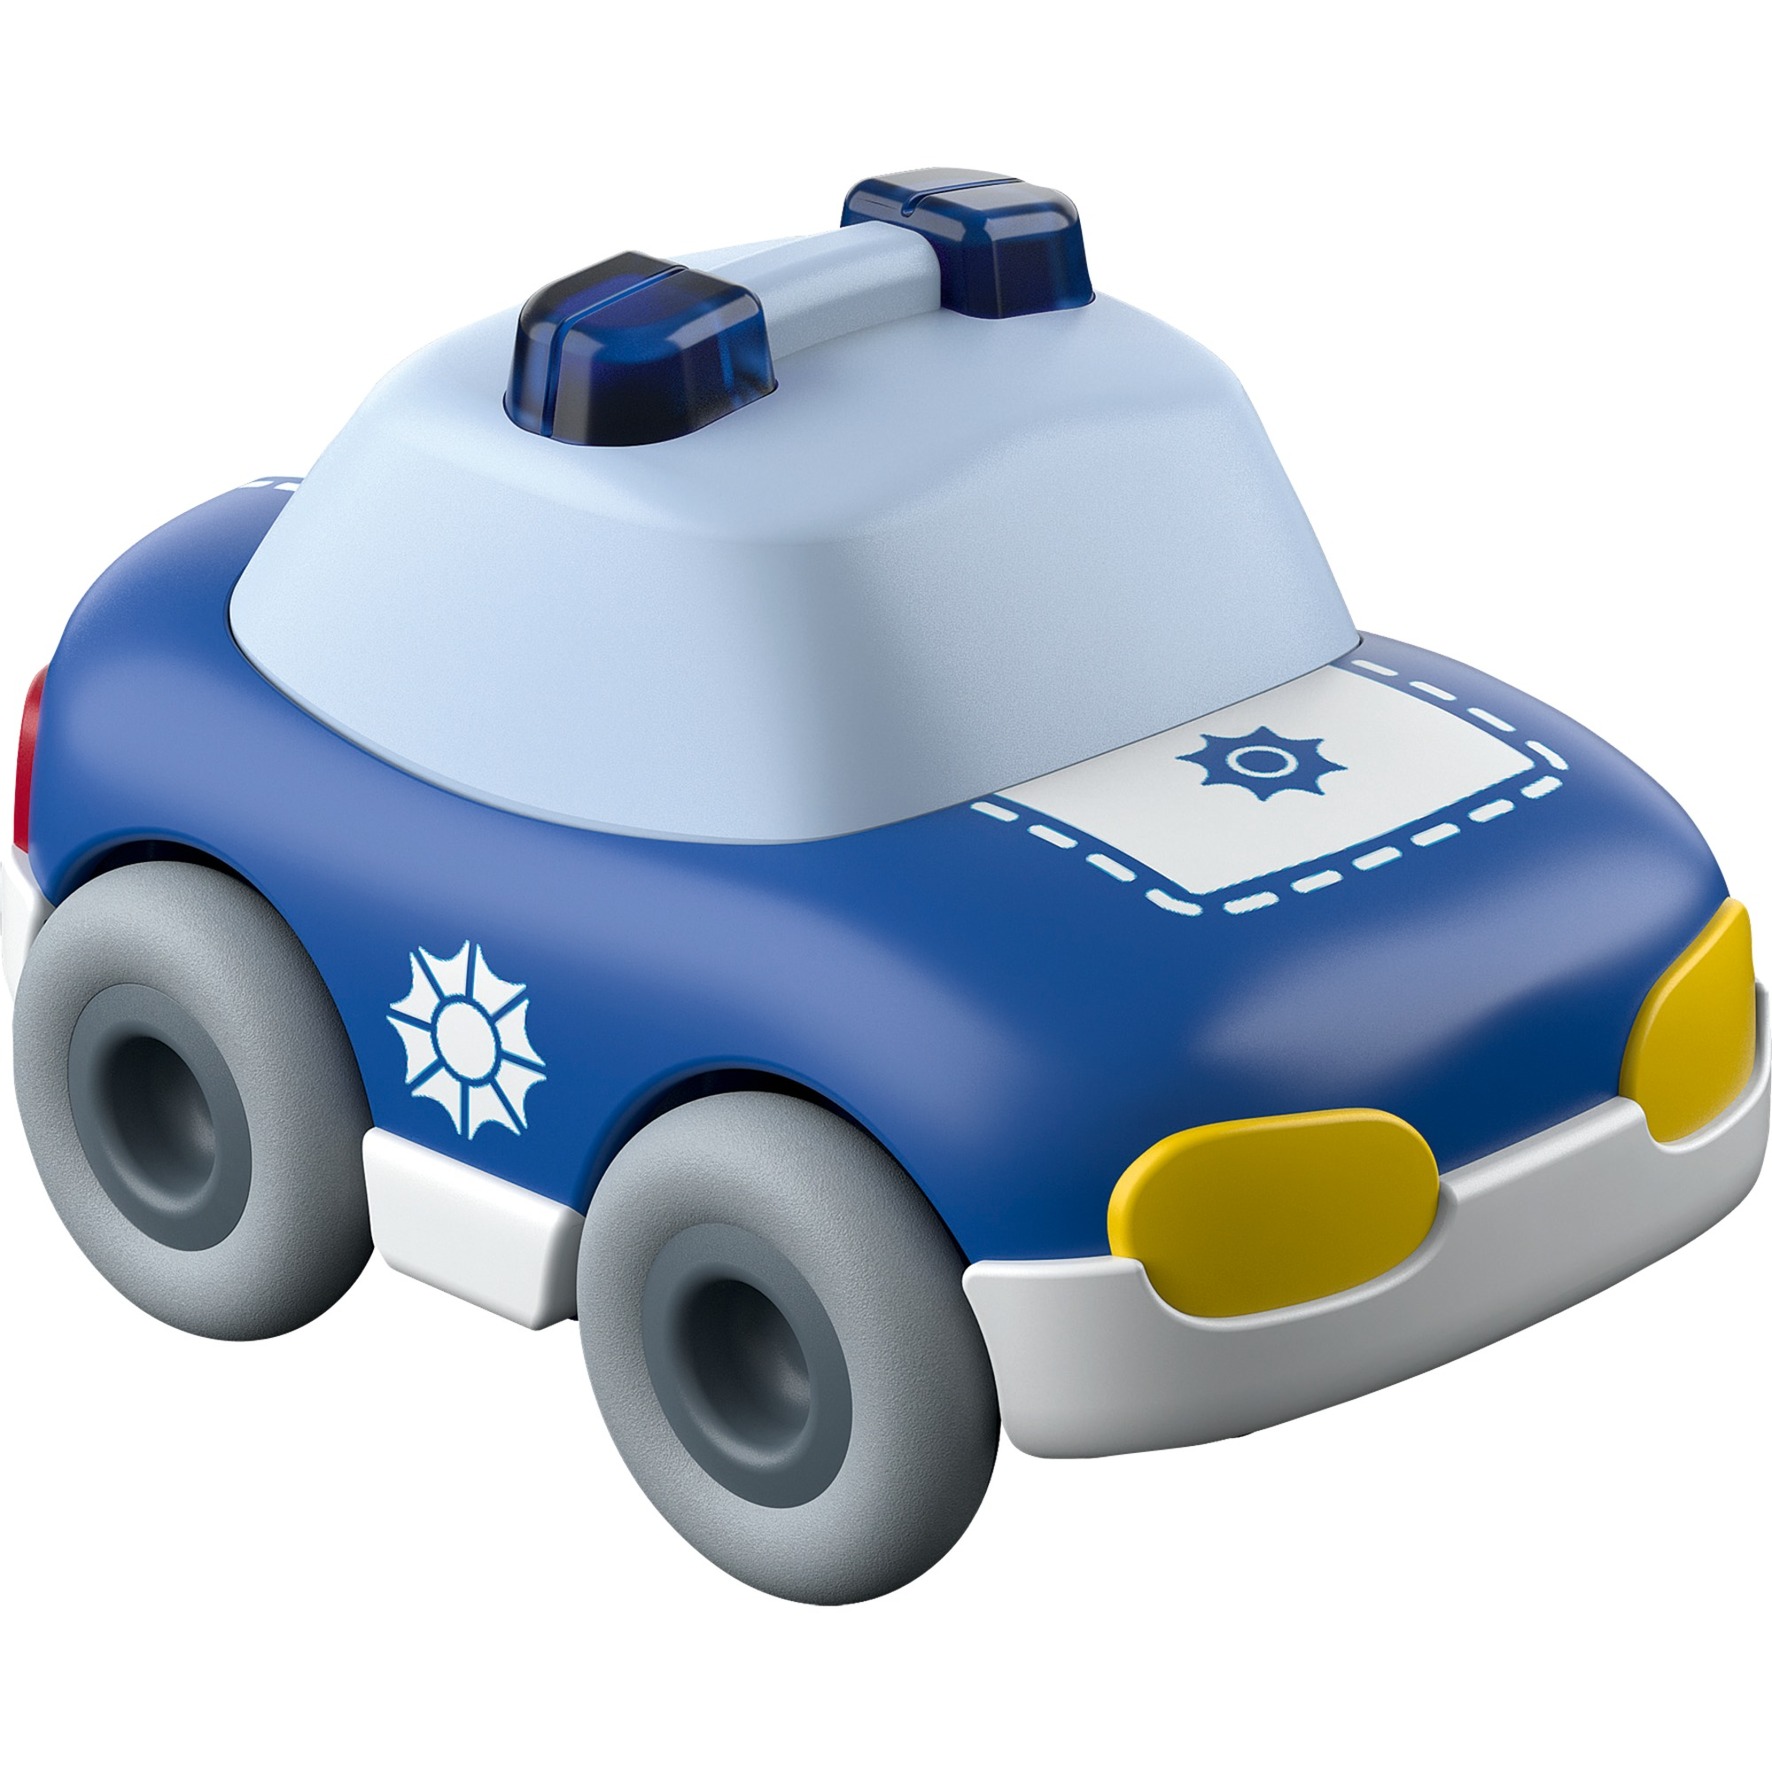 302975, Toy vehicle